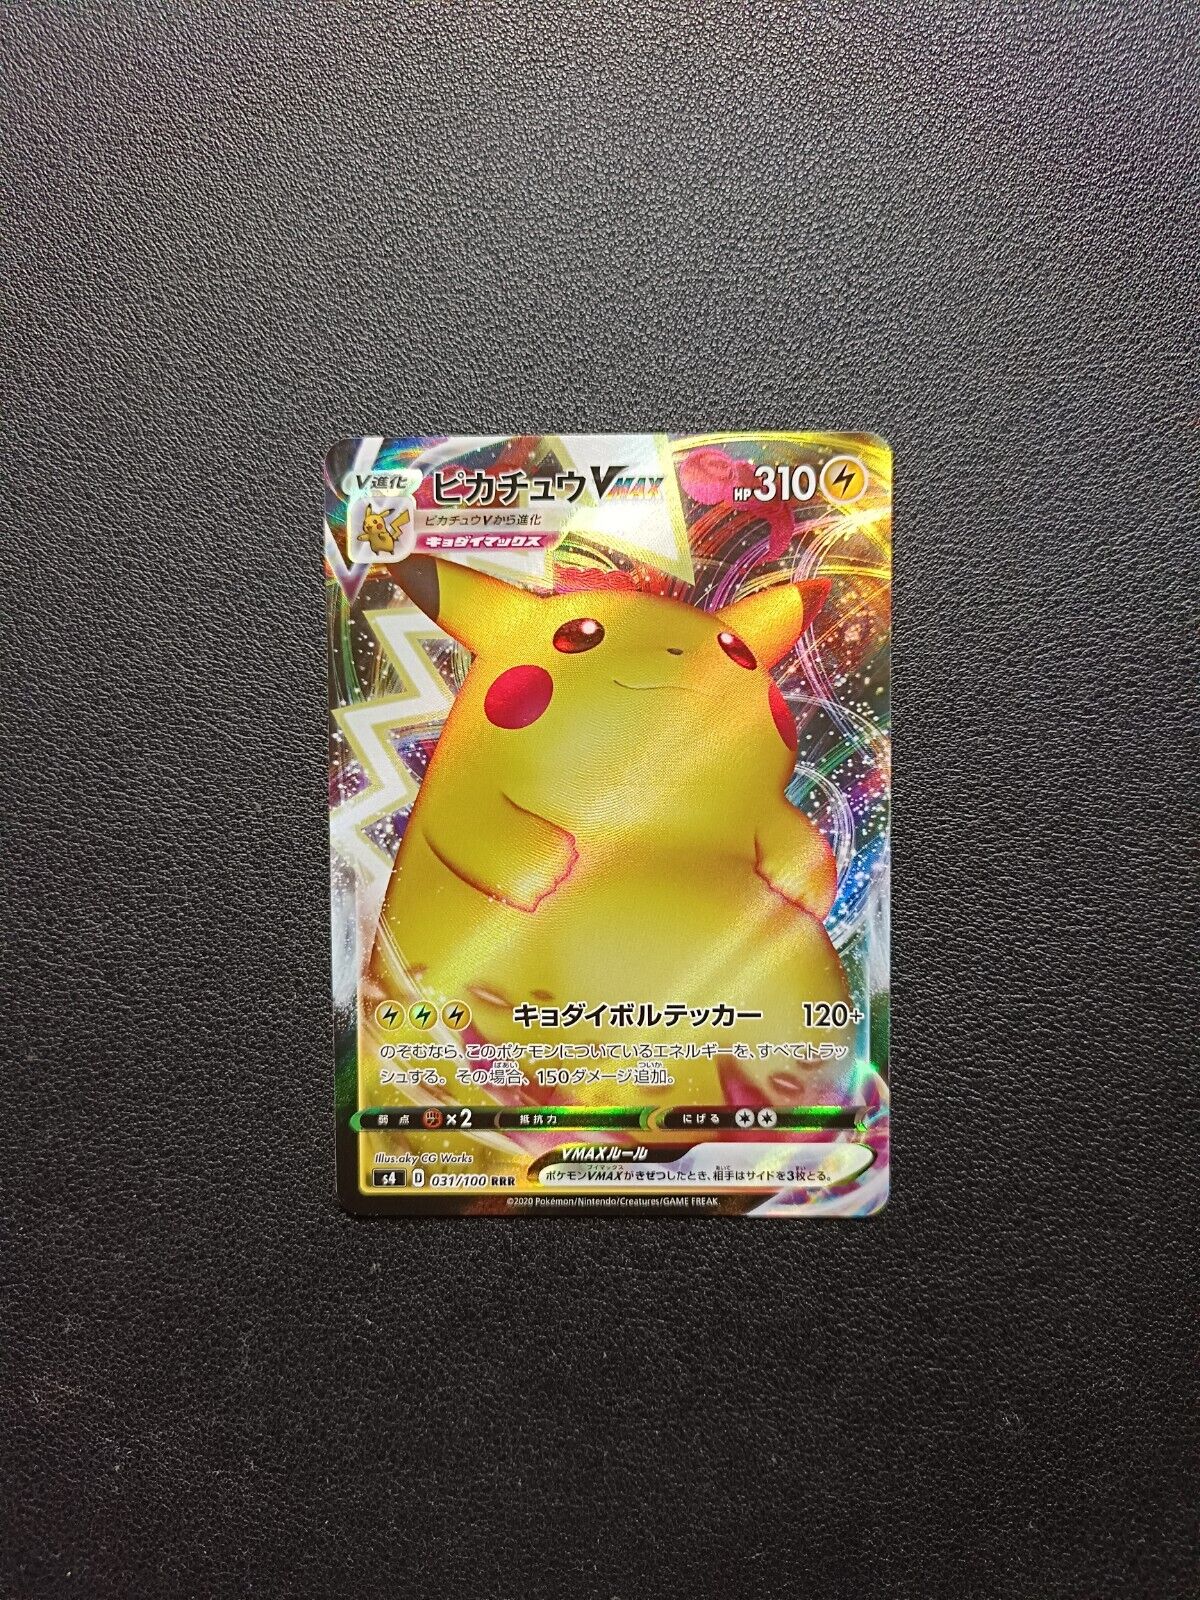  Pokemon Card Pikachu VMAX RR 031/100 s4 Amazing Volt Tackle Japanese 